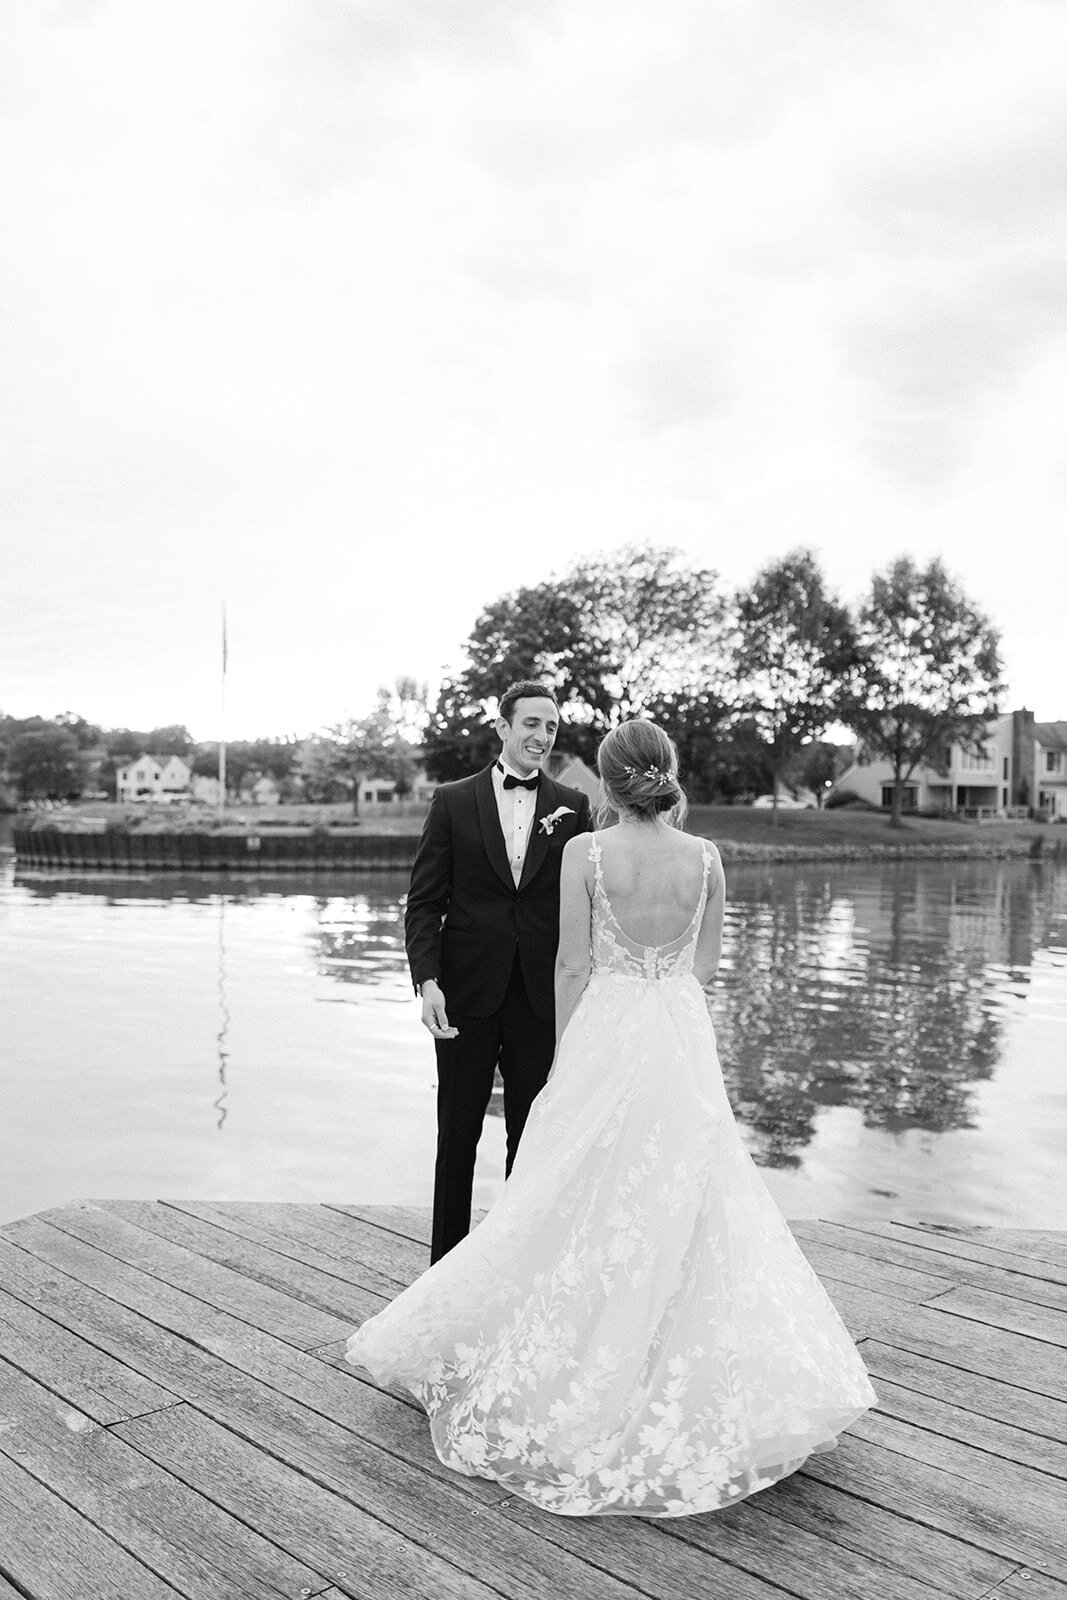 Verve Event Co. The Lake House Fingerlakes Weddings Laura Rose Photography Wedding Photo Ideas-1298